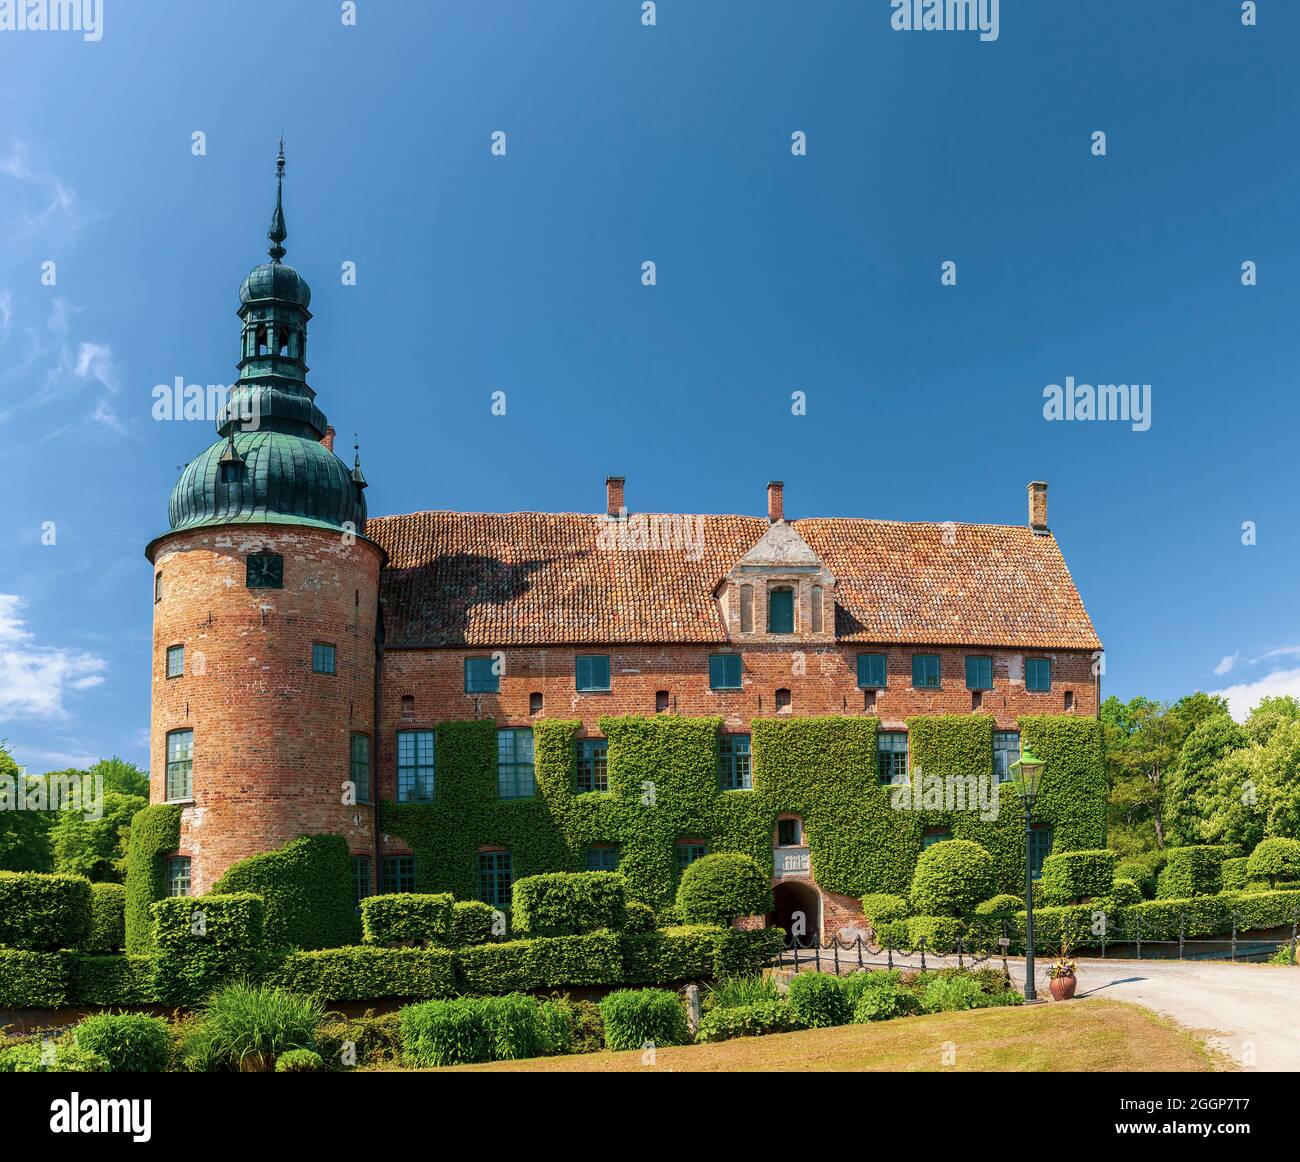 The historic castle of Vittsjkovle in south Sweden. Stock Photo